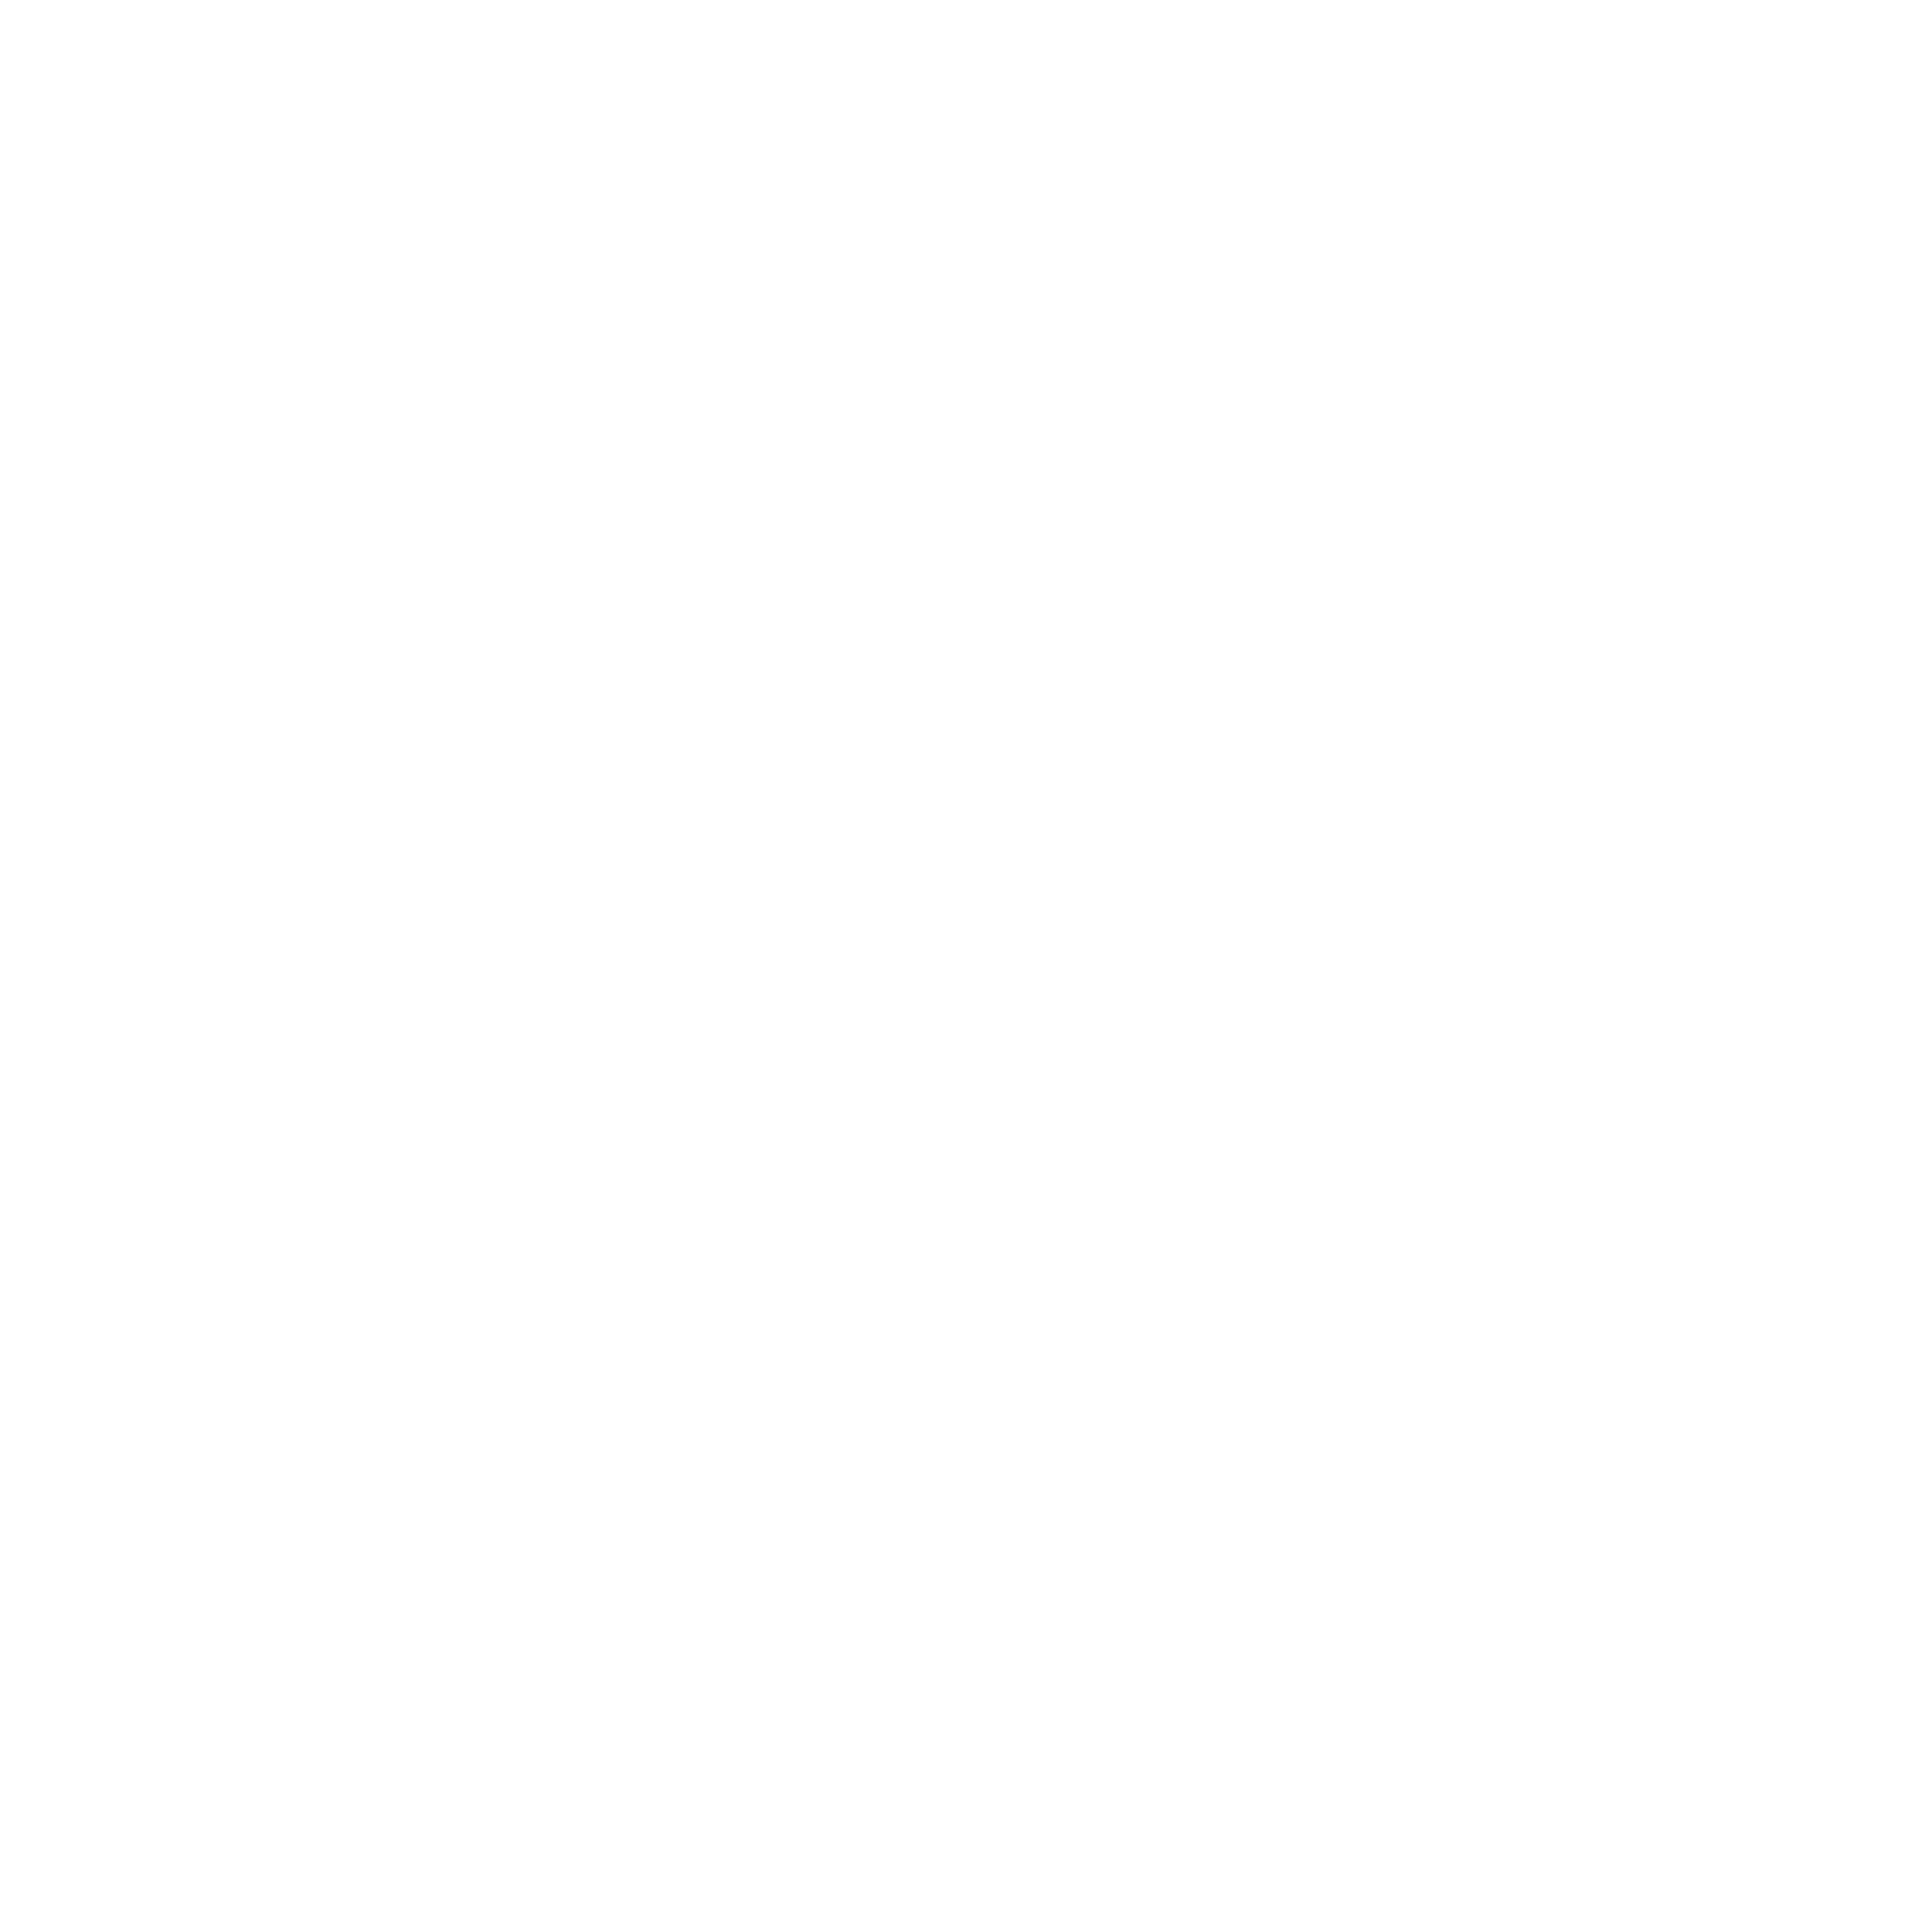 Chimalli Apps